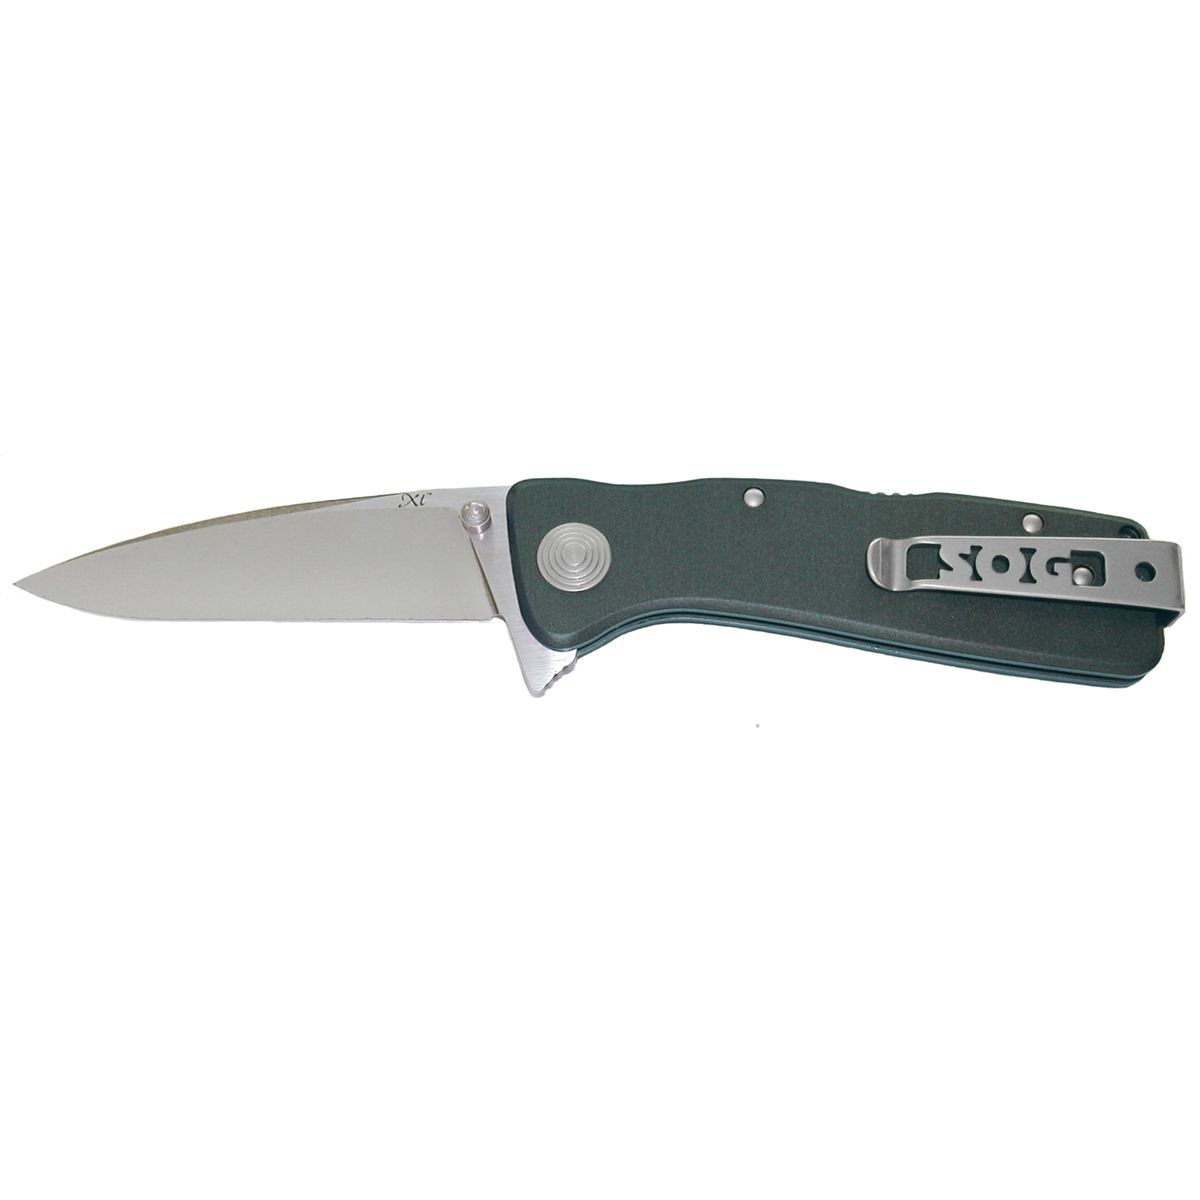 Twitch XL Folding Knife w/ Anodized Aluminum Handle - 3.25 Inch